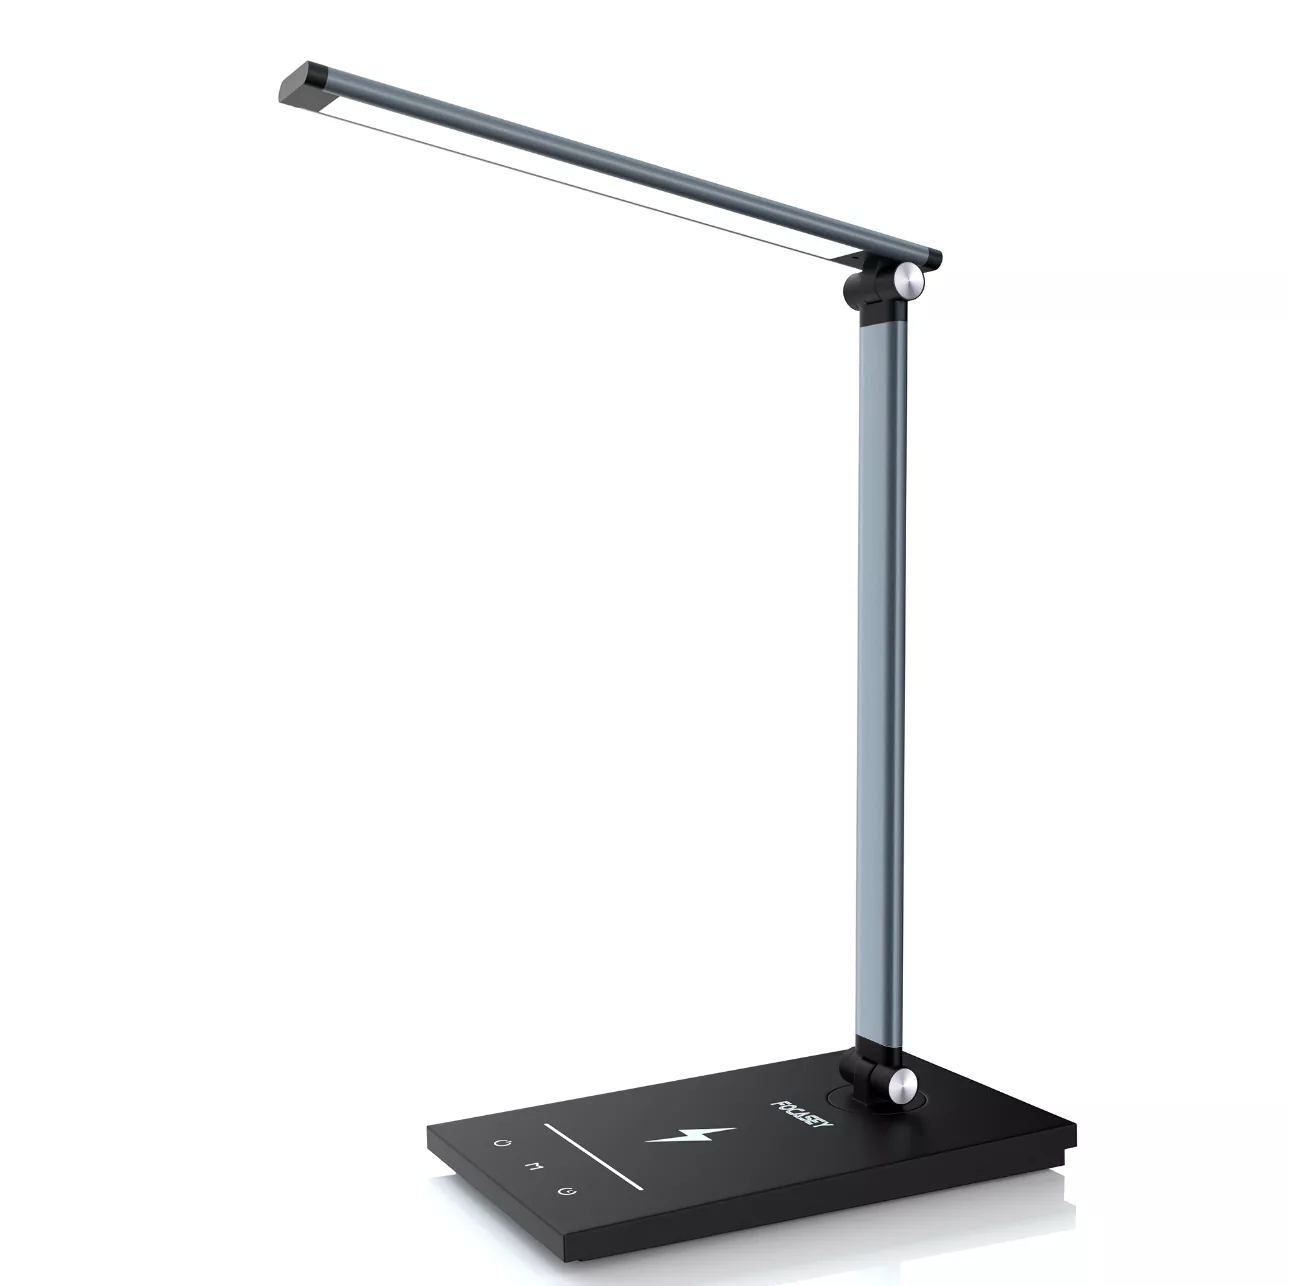 Intelligent LED desk lamp photography